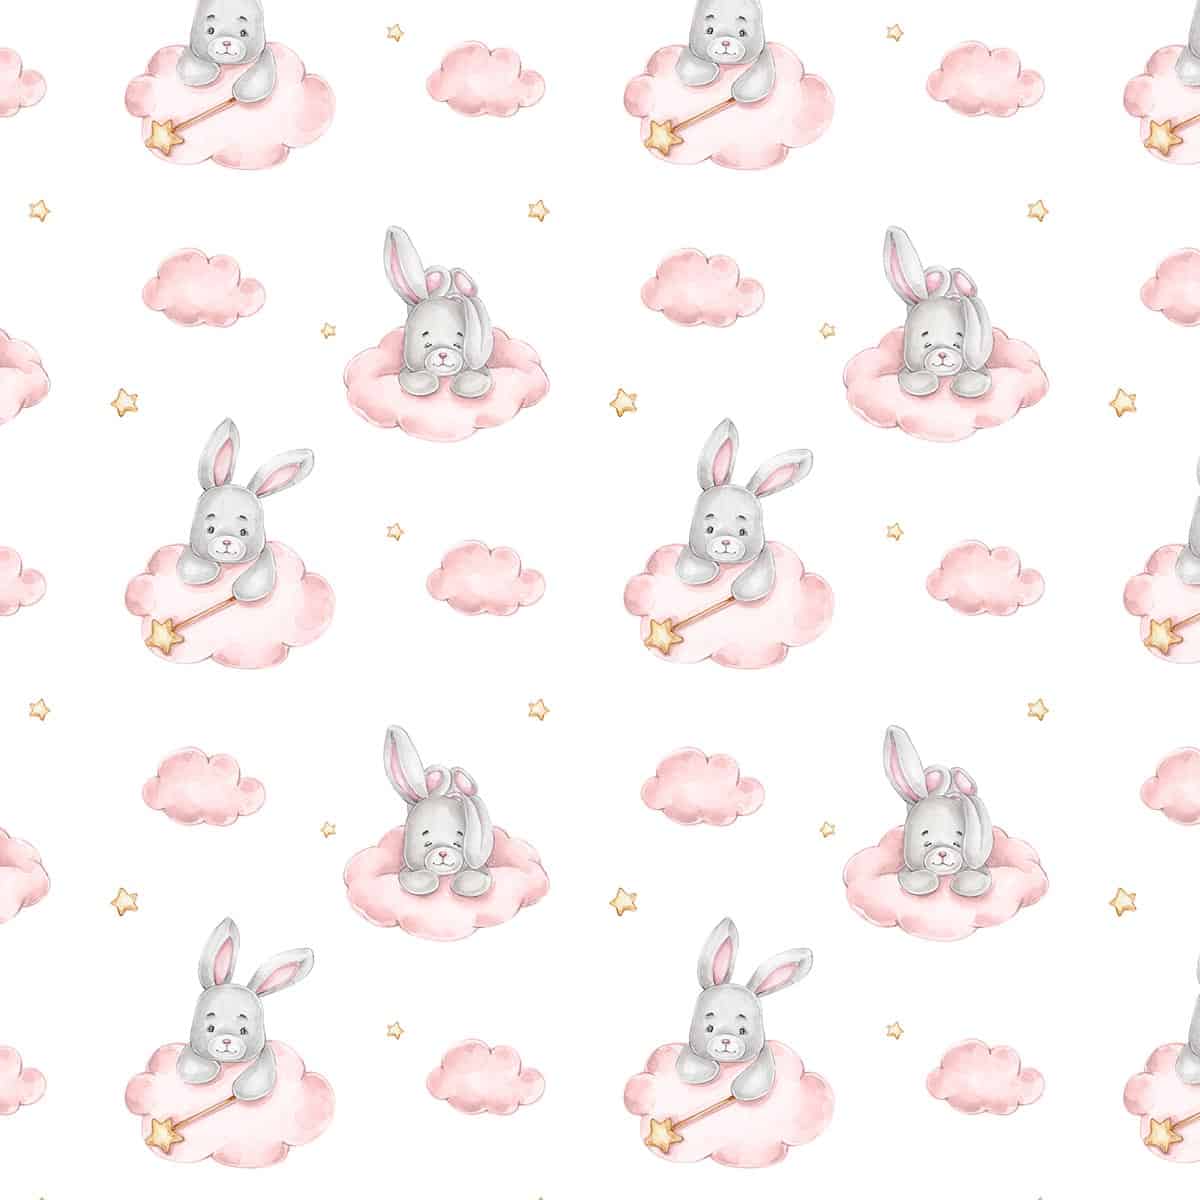 Peek-a-Boo, Cute Bunnie Wallpaper Designs for Kids Room, Pink